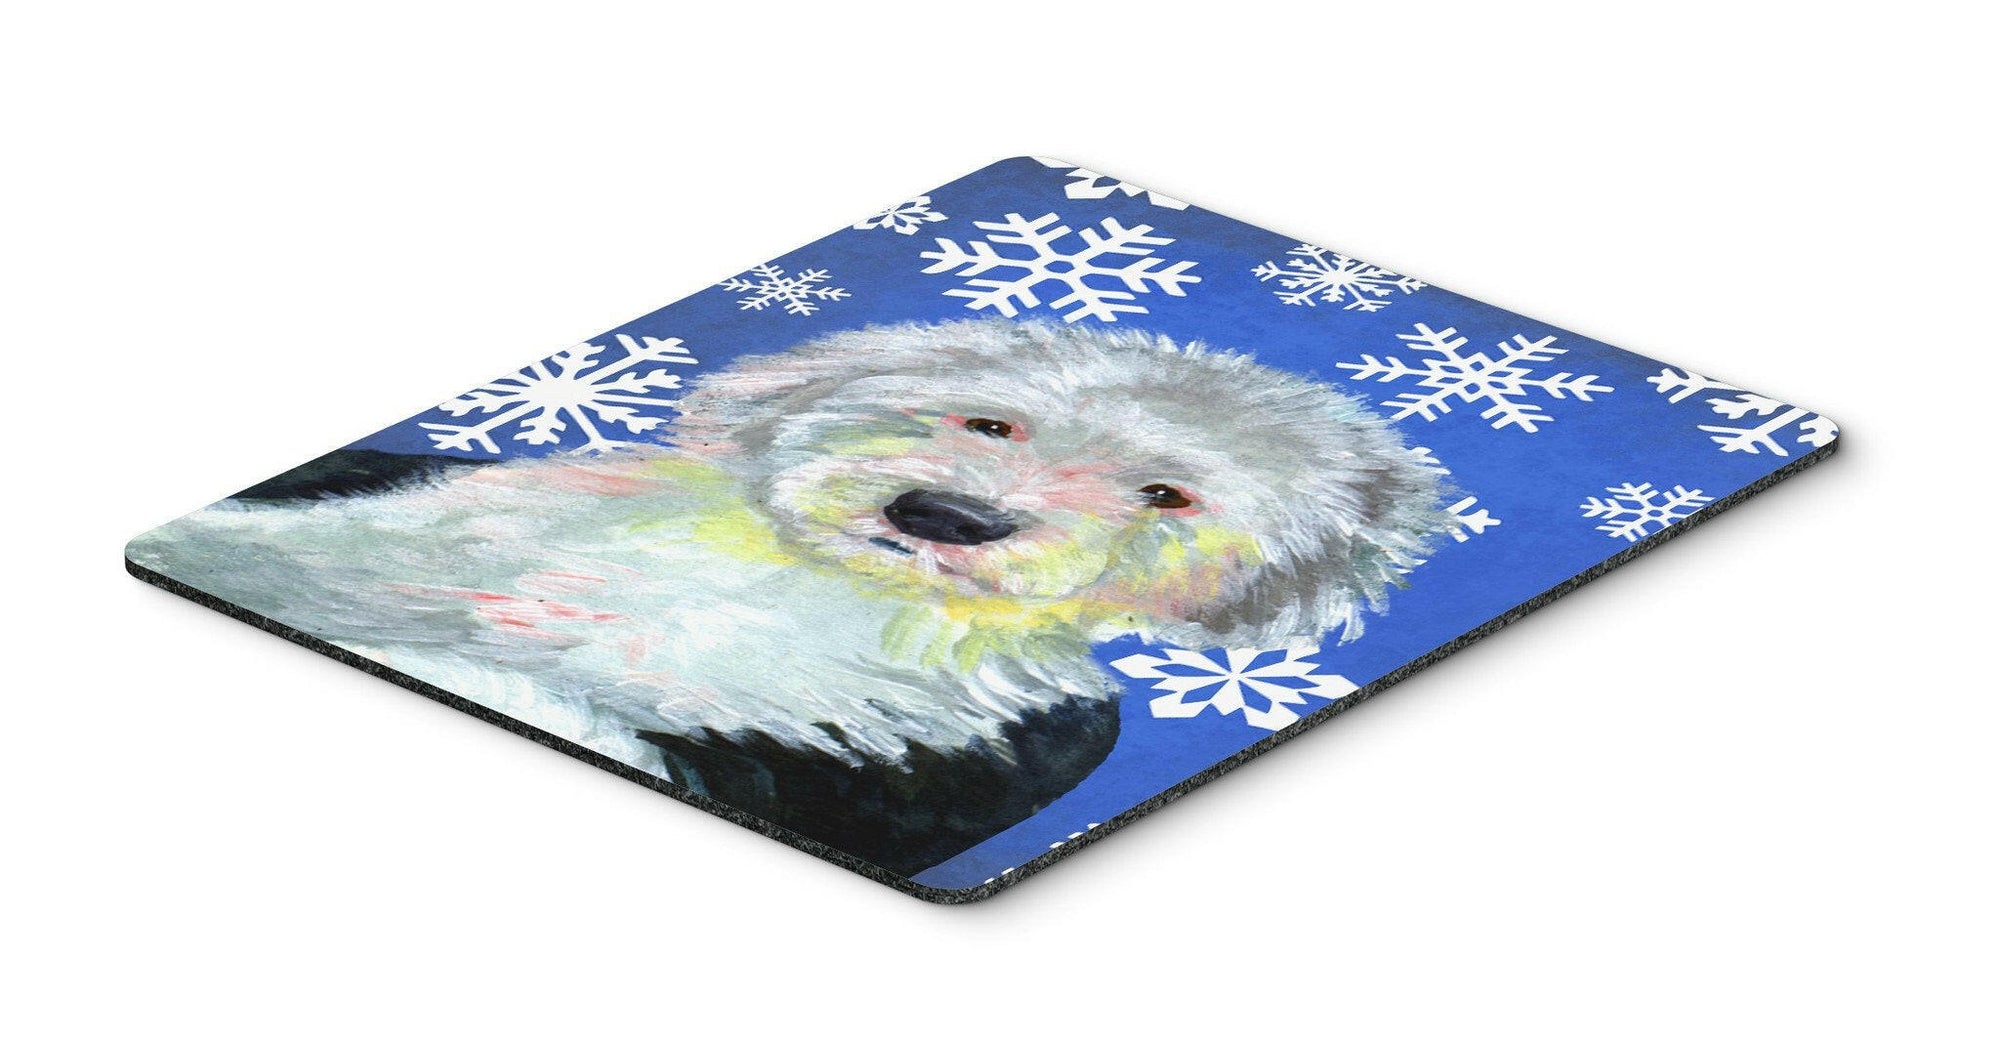 Old English Sheepdog Winter Snowflakes Holiday Mouse Pad, Hot Pad or Trivet by Caroline's Treasures